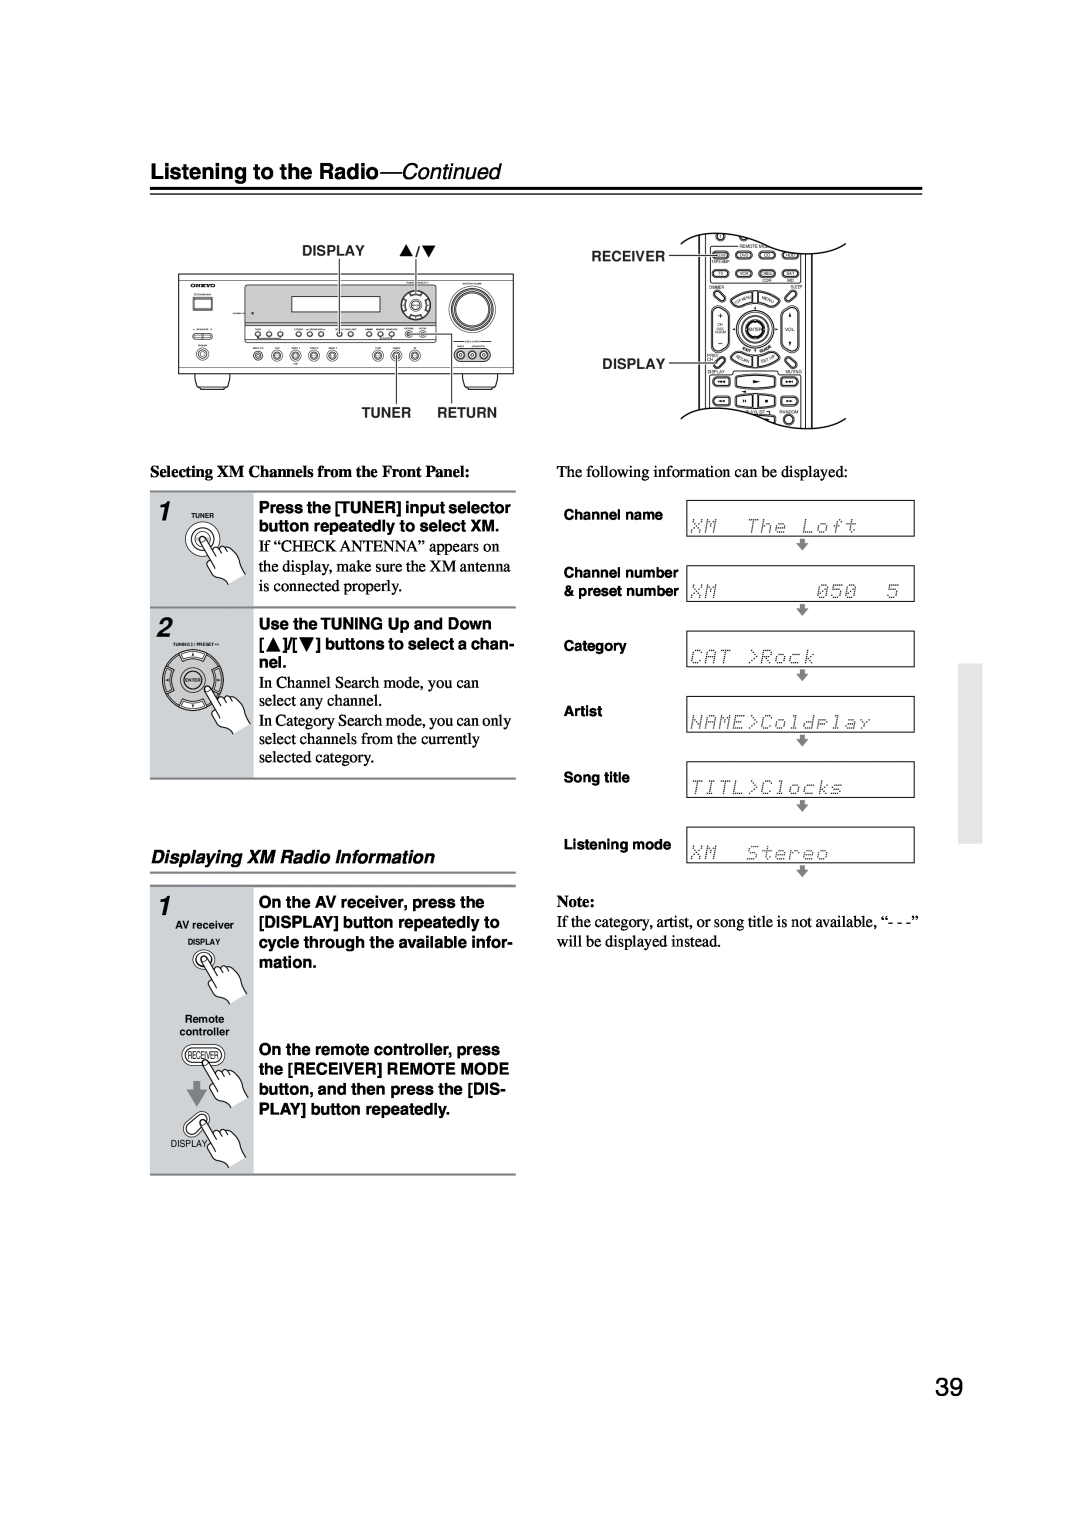 Onkyo TX-SR573 instruction manual Displaying XM Radio Information, Listening to the Radio—Continued 